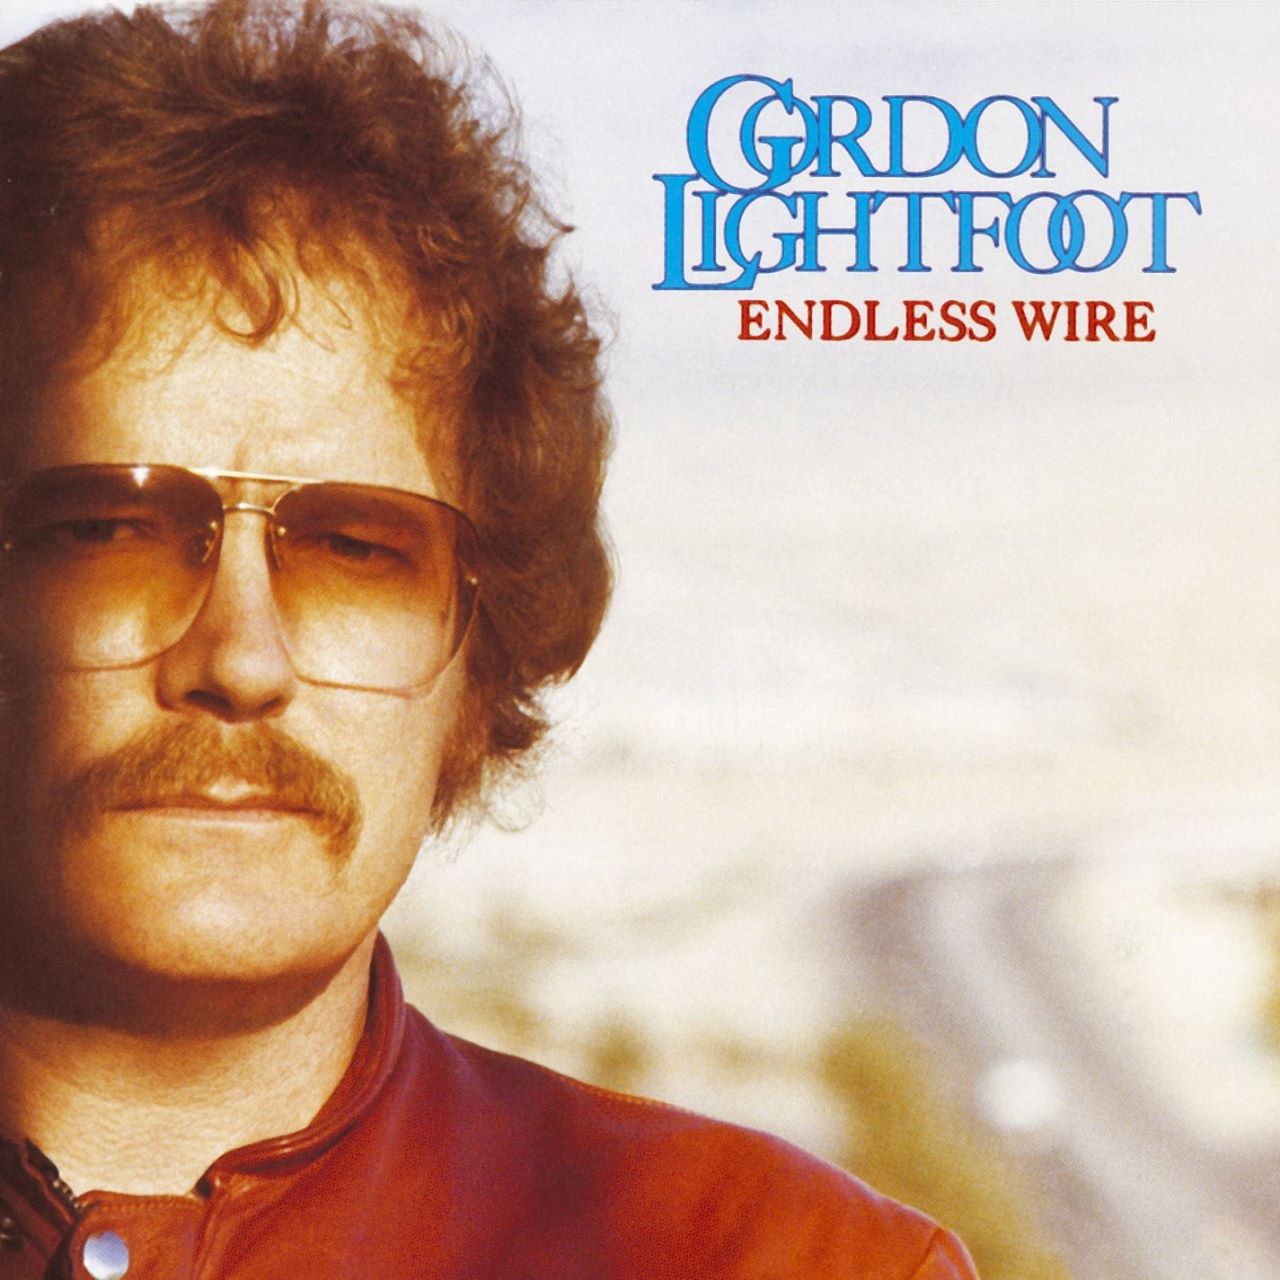 Gordon Lightfoot - Endless Wire cover album